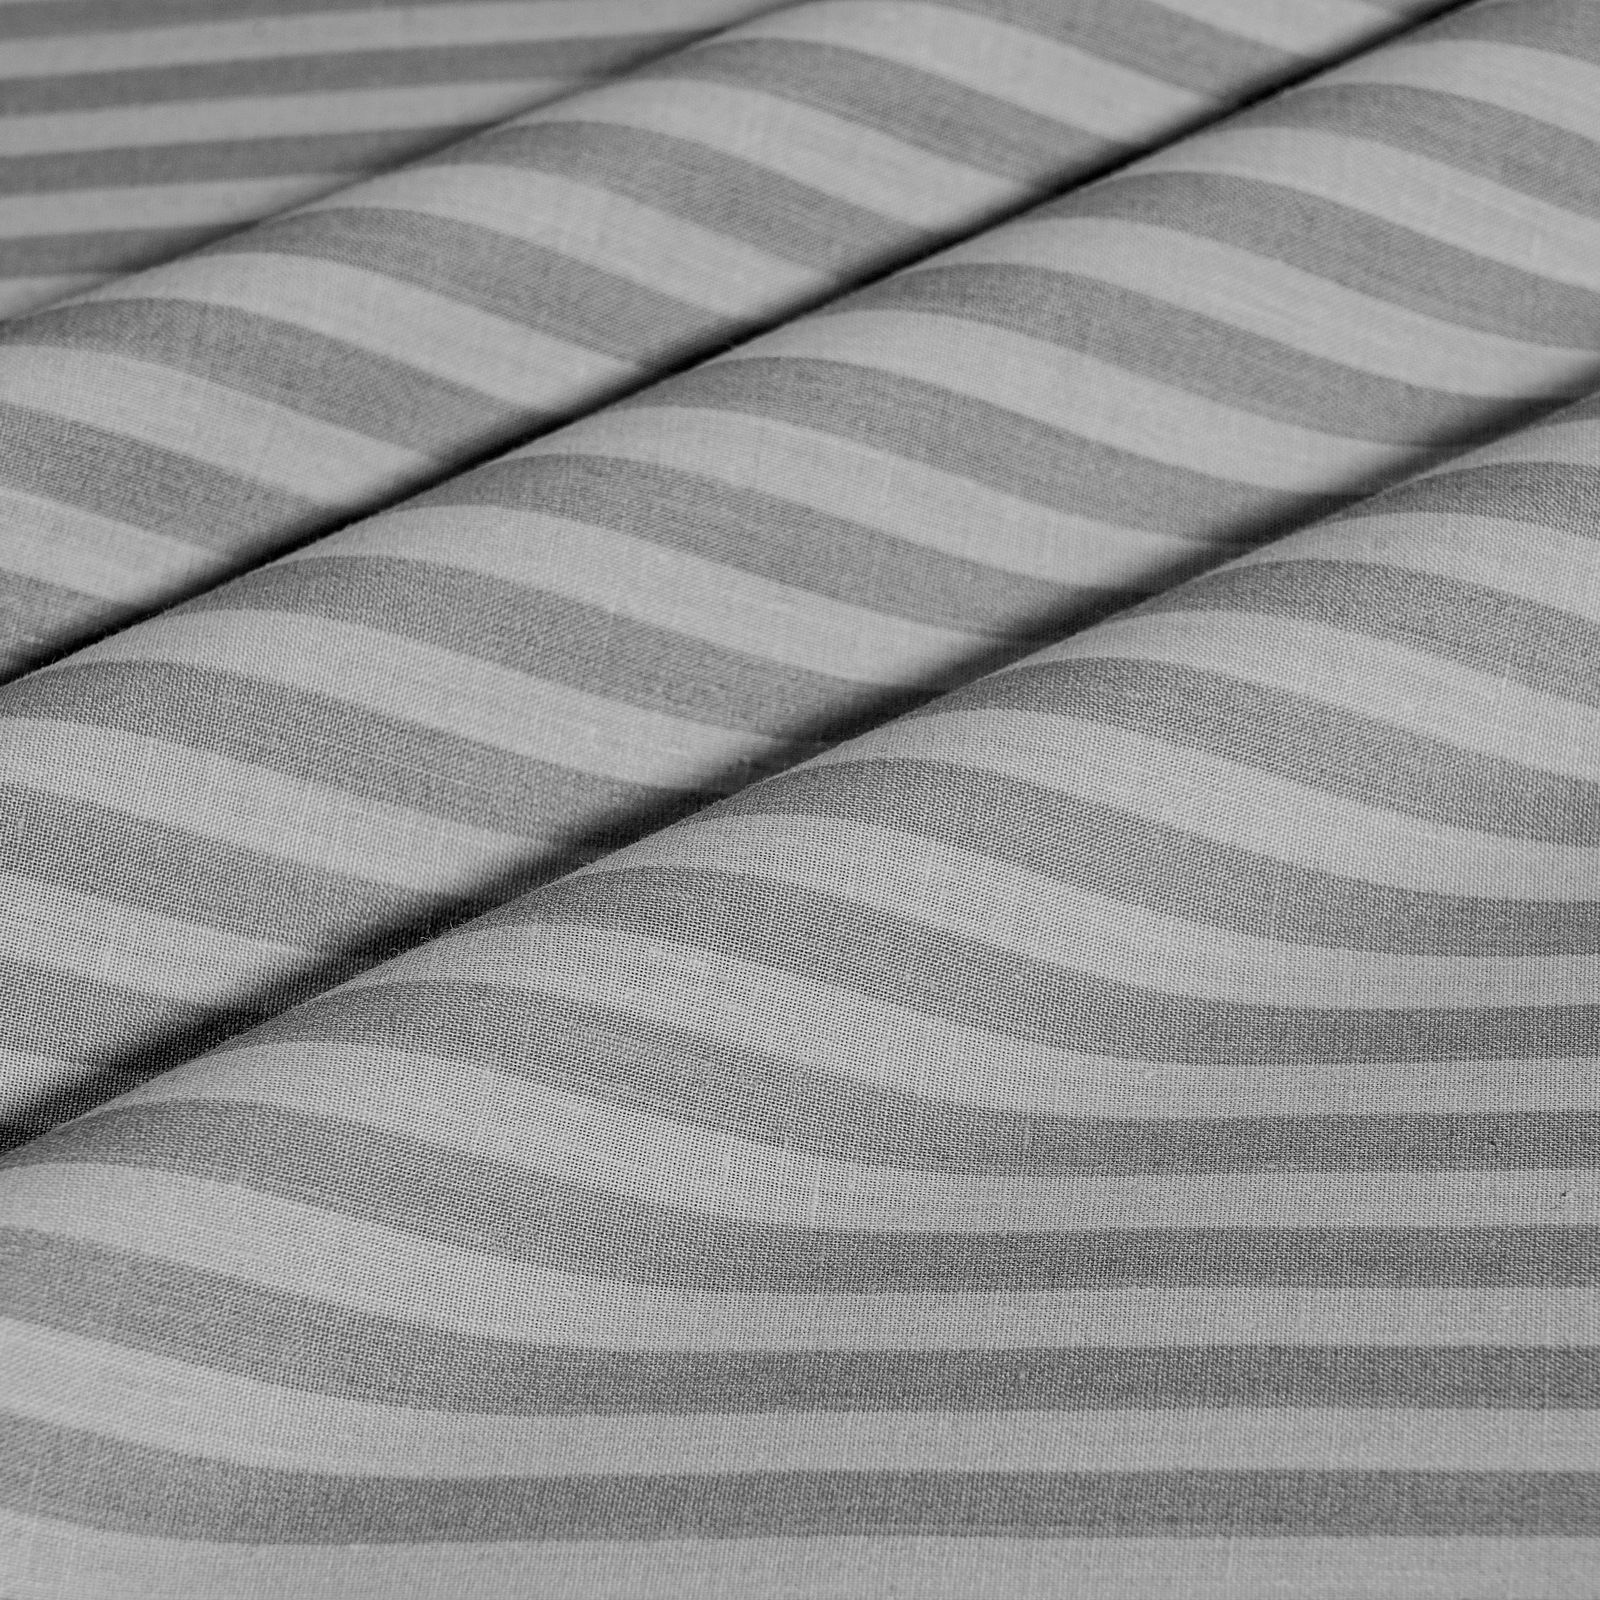 Простыня на резинке Medsleep Линдау серый 160х200х25 см - фото 3